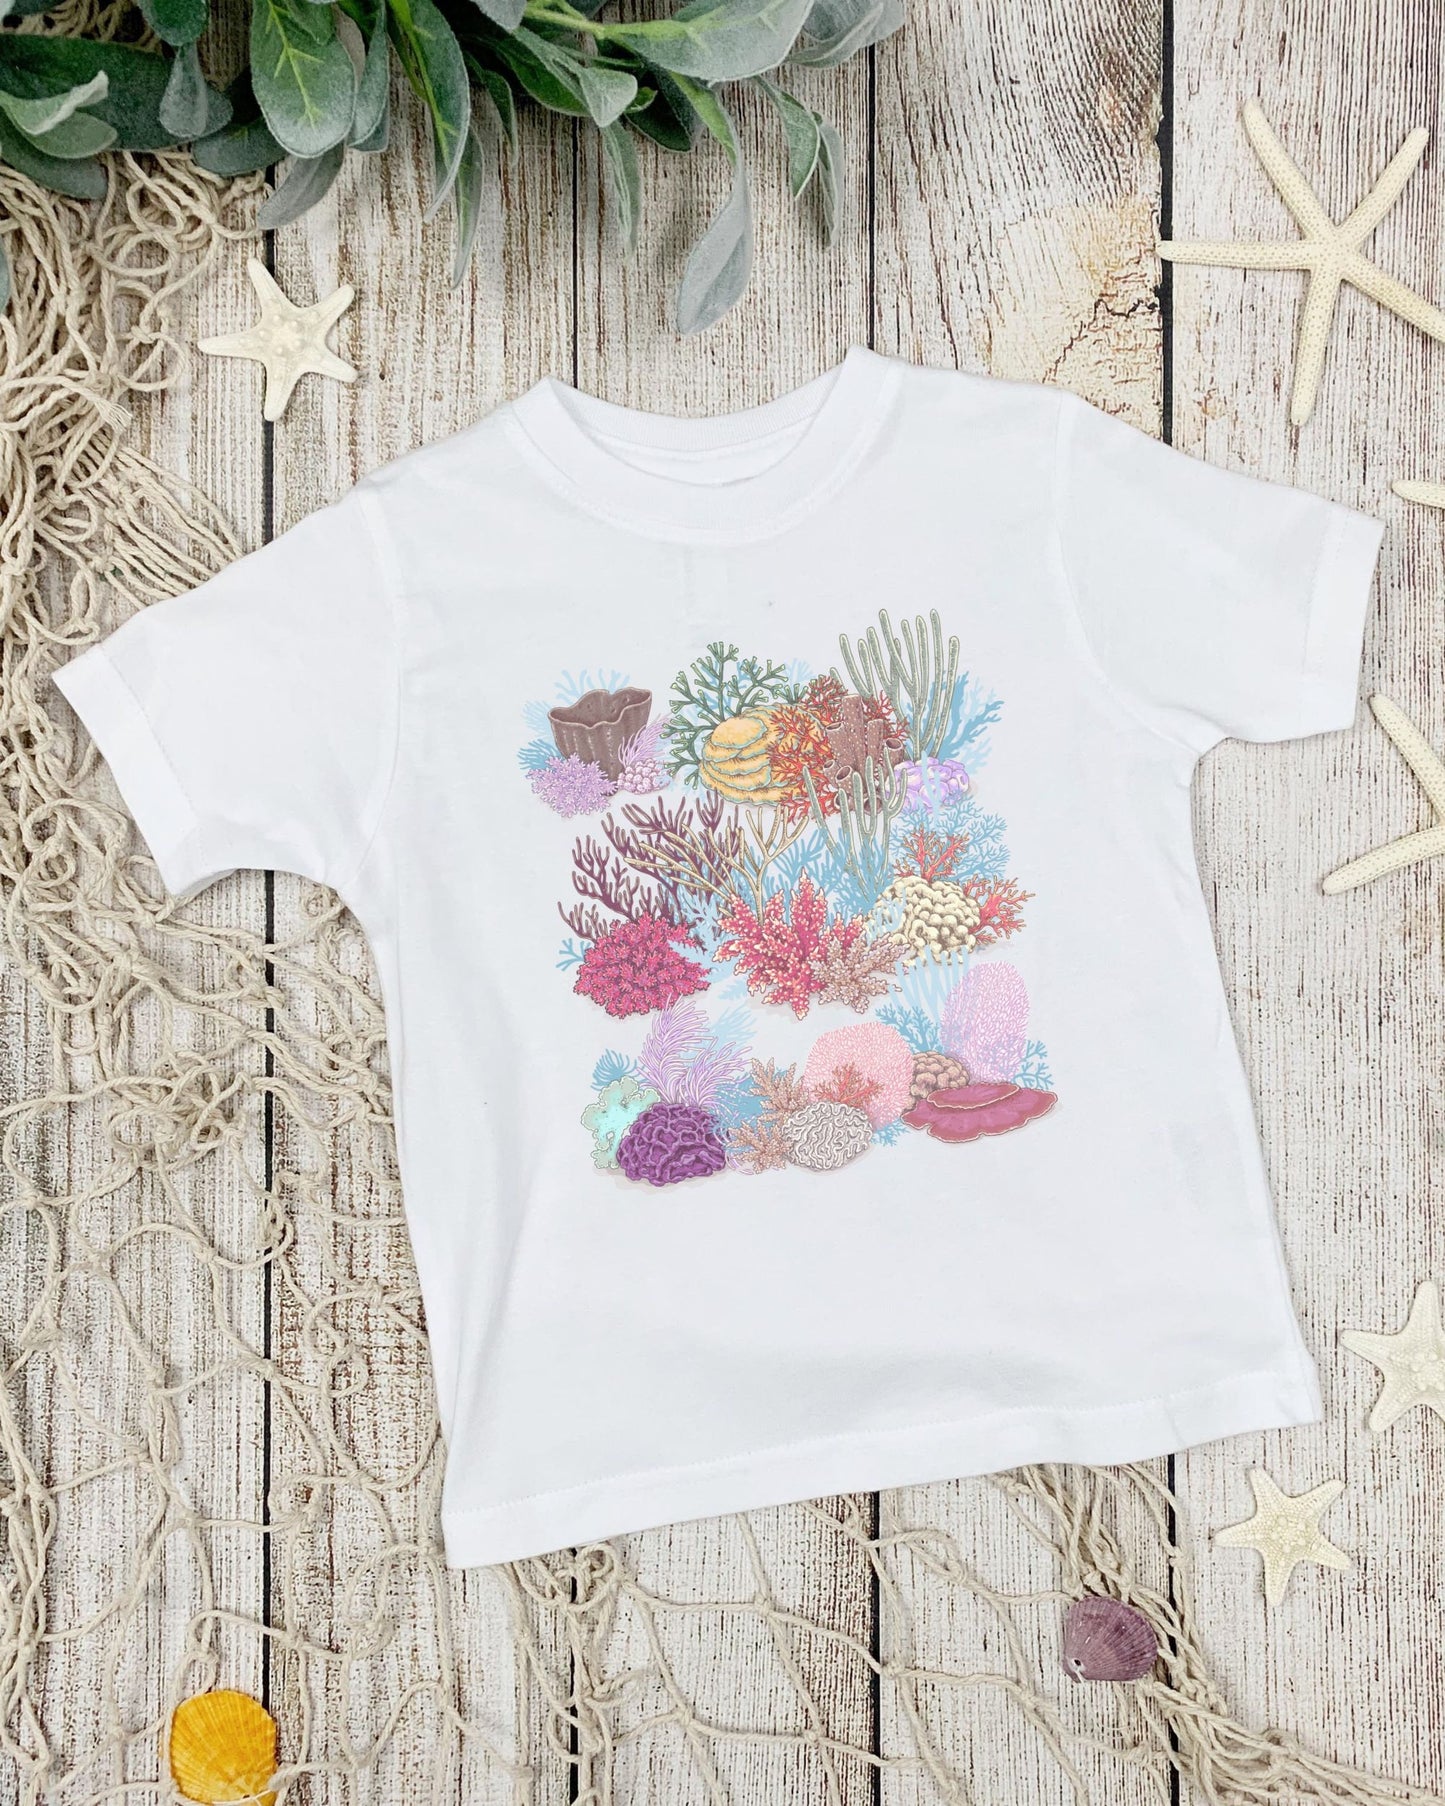 Coral Reef Shirt For Kids Mermaidcore Shirt Toddler Oceancore Shirt Girl Kids Ocean Shirt Beach Shirt for Toddler